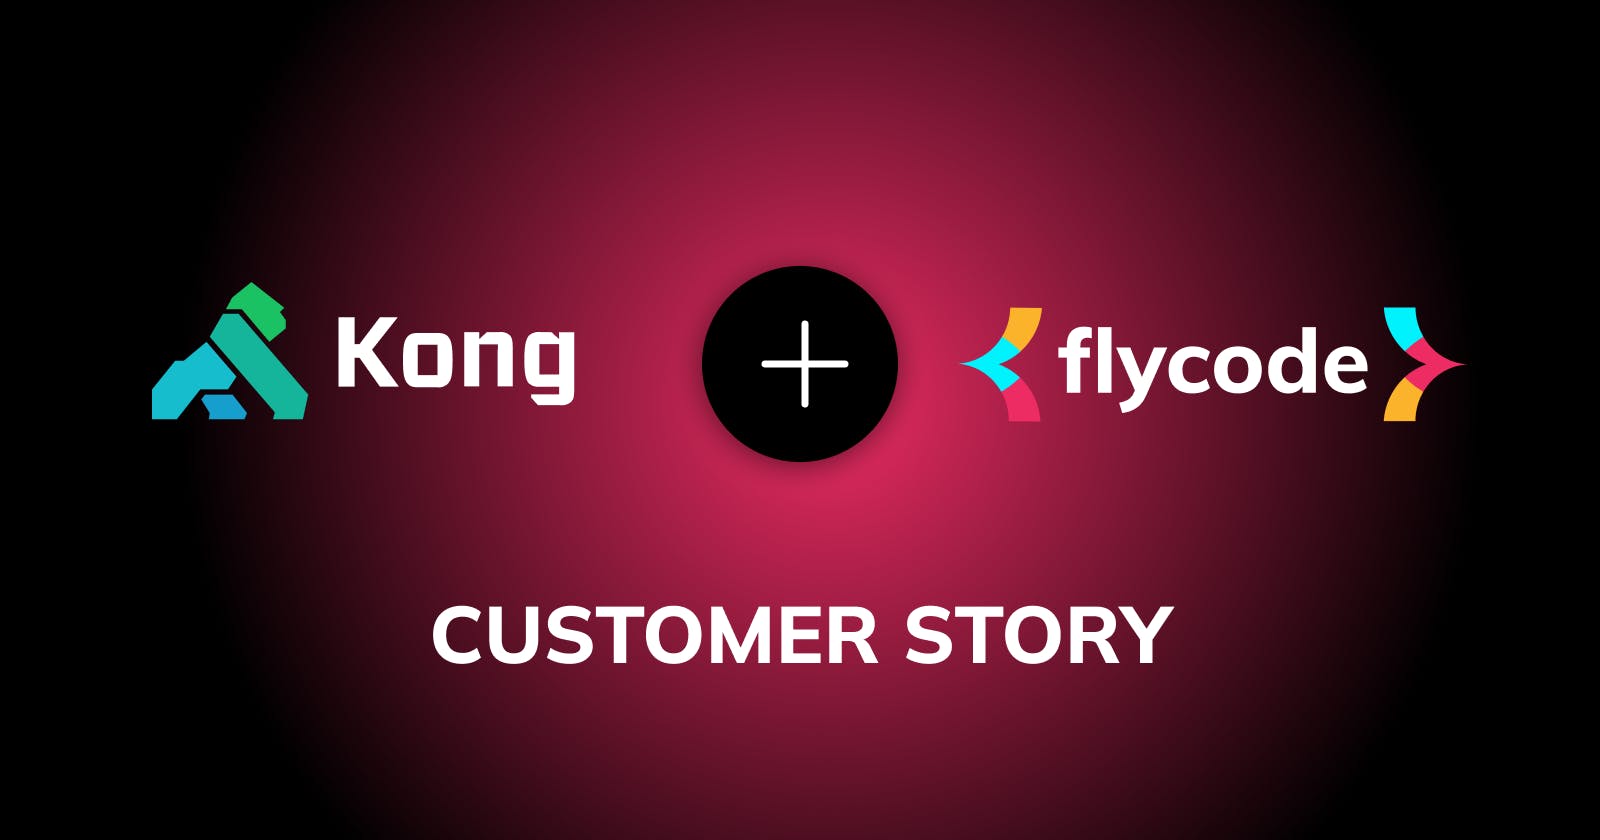 How Kong is using FlyCode? 
Kong Inc. customer story